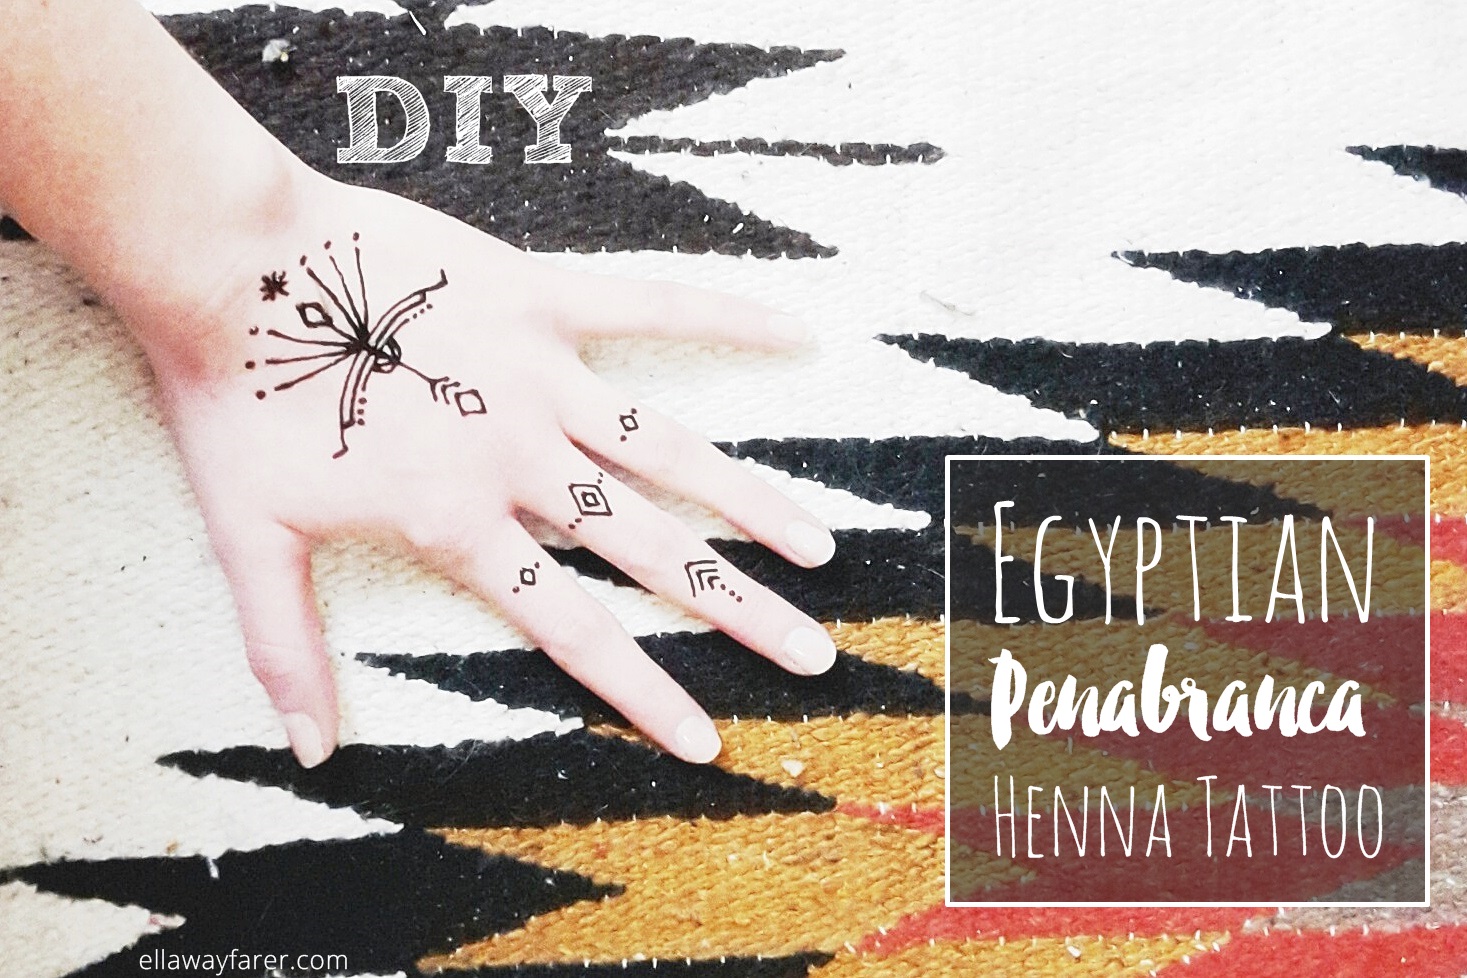 HENNA | Egyptian Penabranca Tattoo | ellawayfarer.com